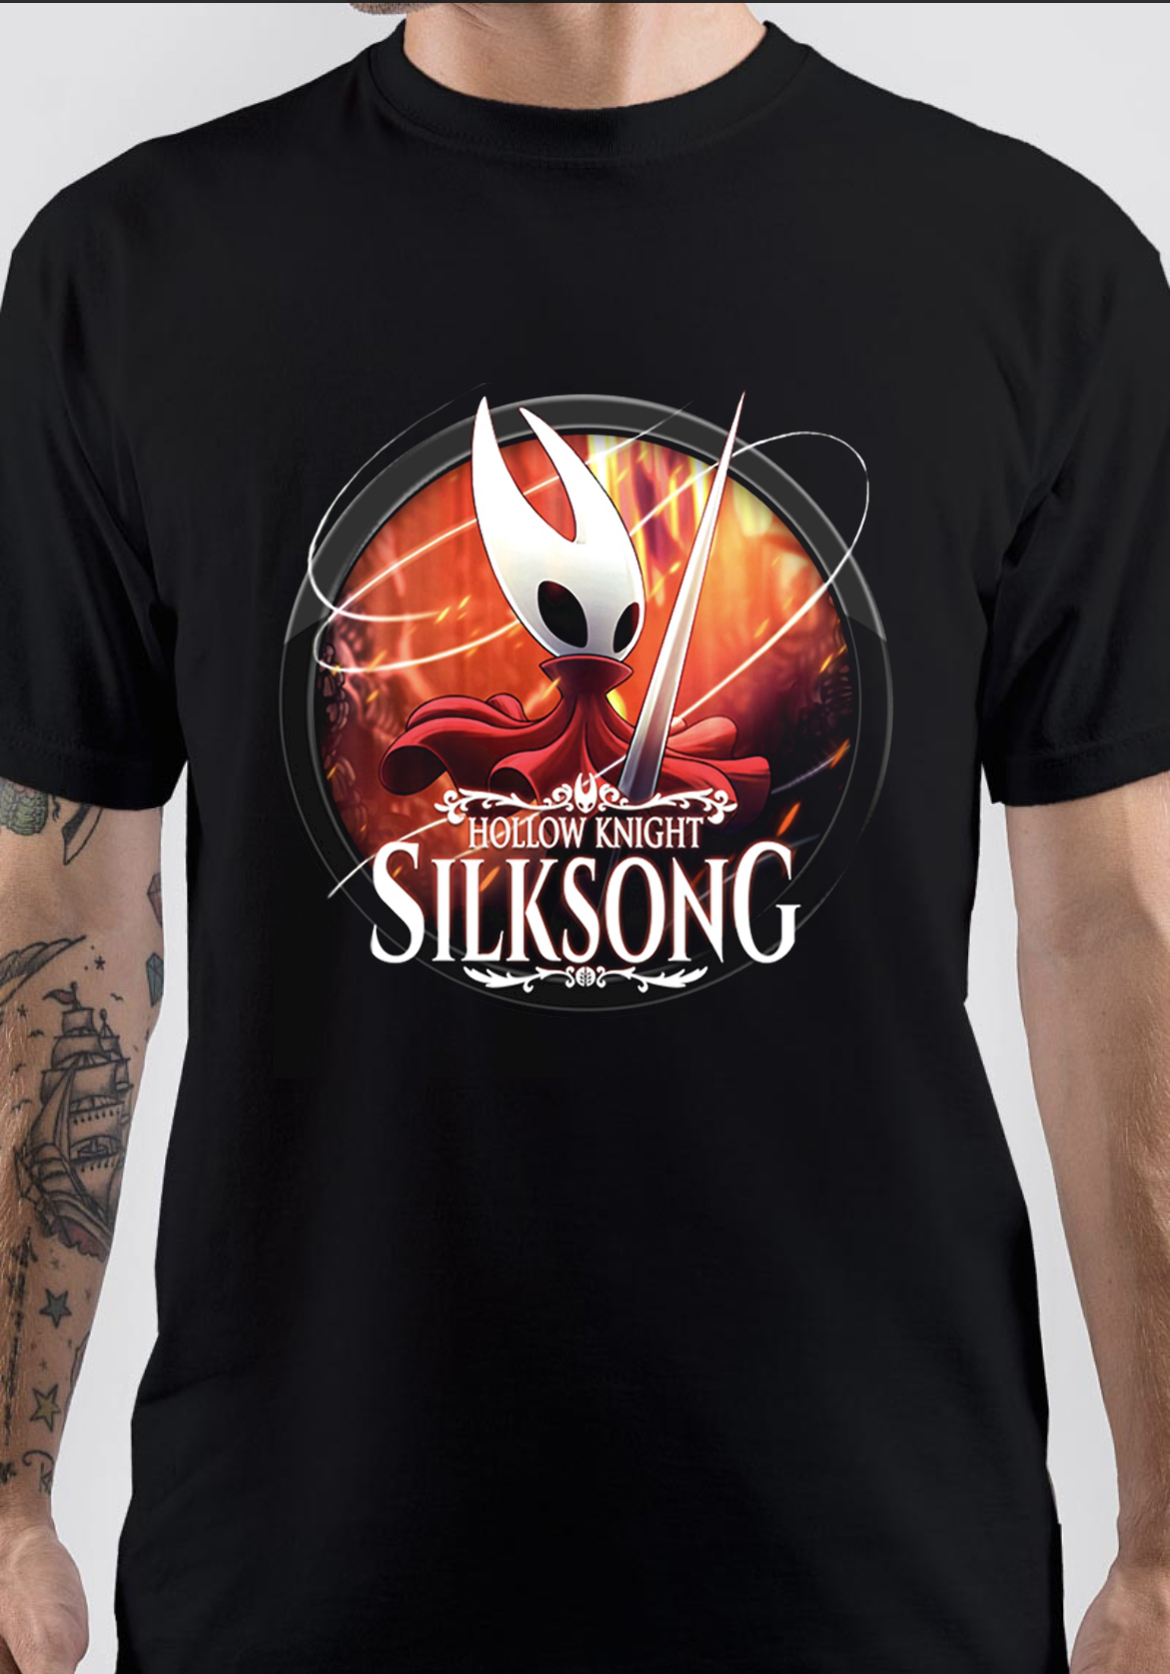 Hollow Knight Silksong T-Shirt And Merchandise